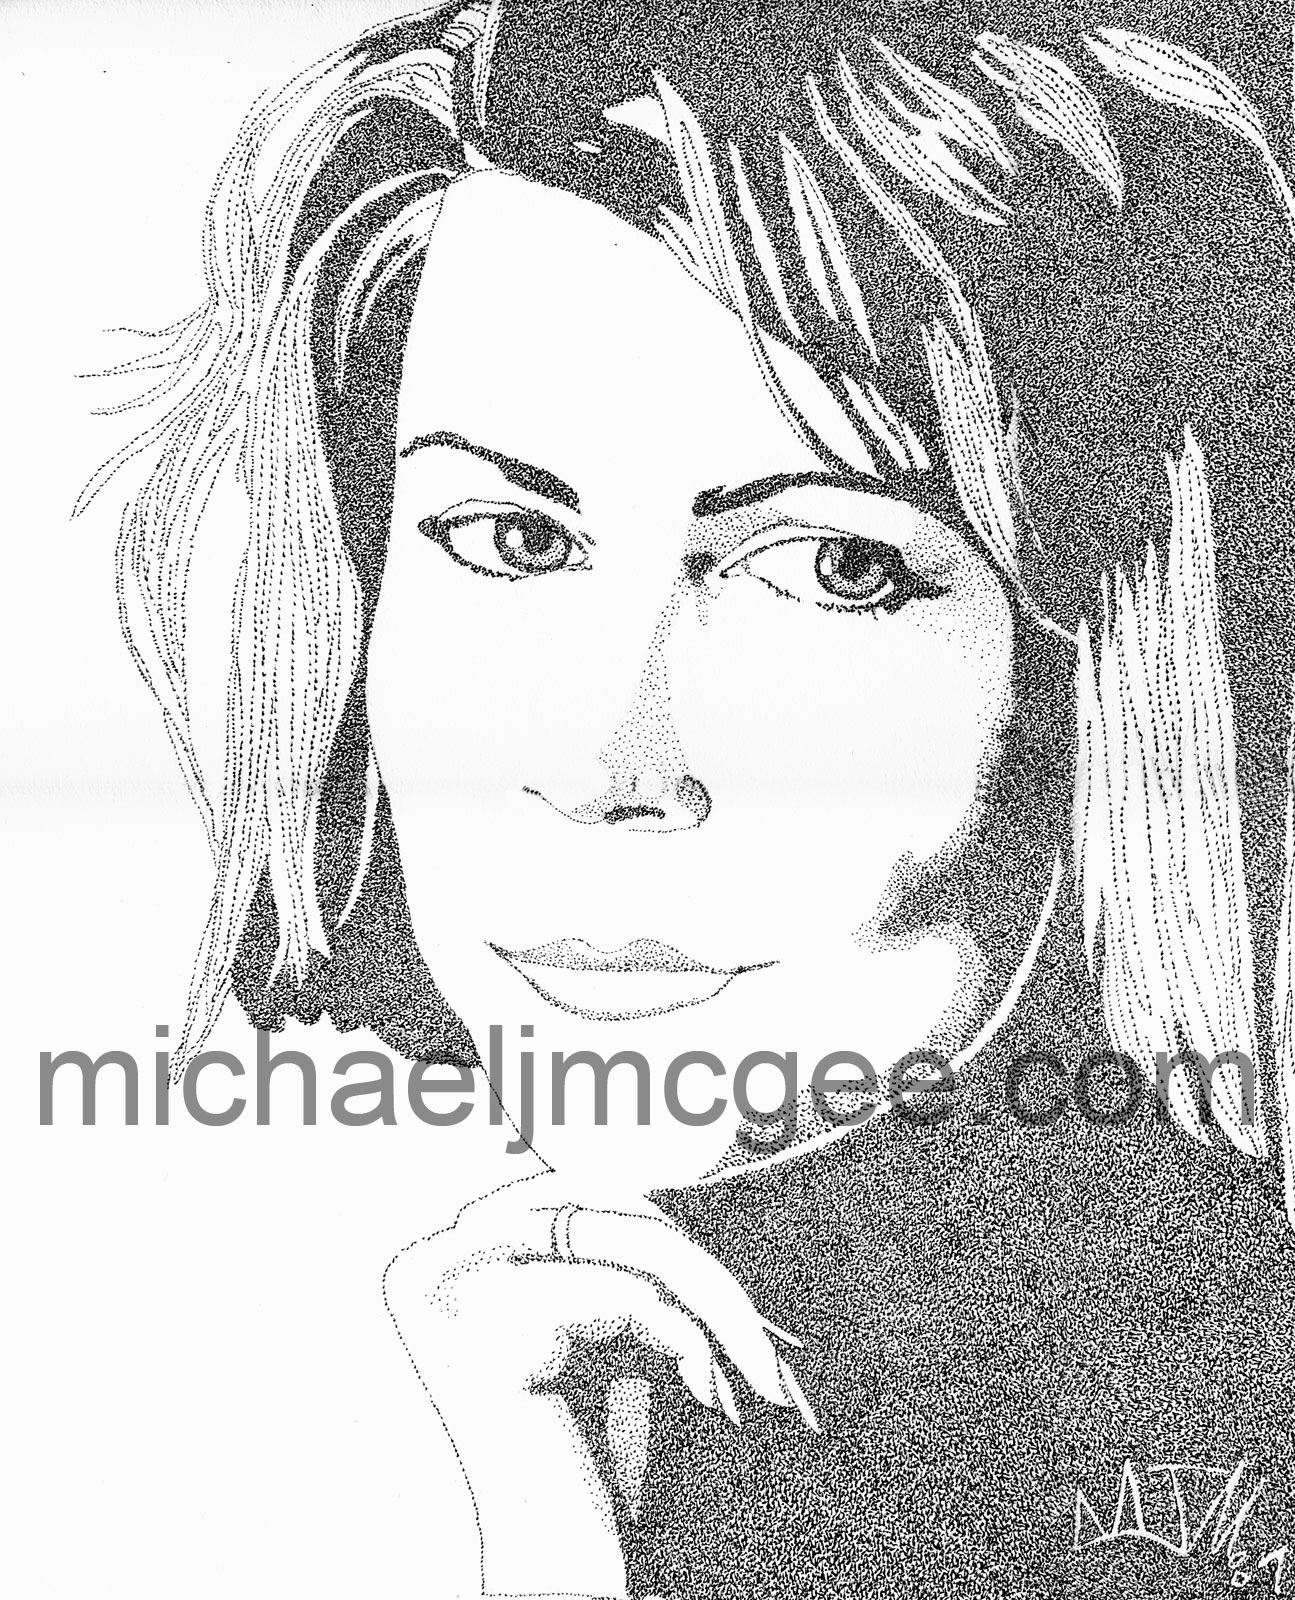 Belinda Carlisle / MJM Artworks / michaeljmcgee.com